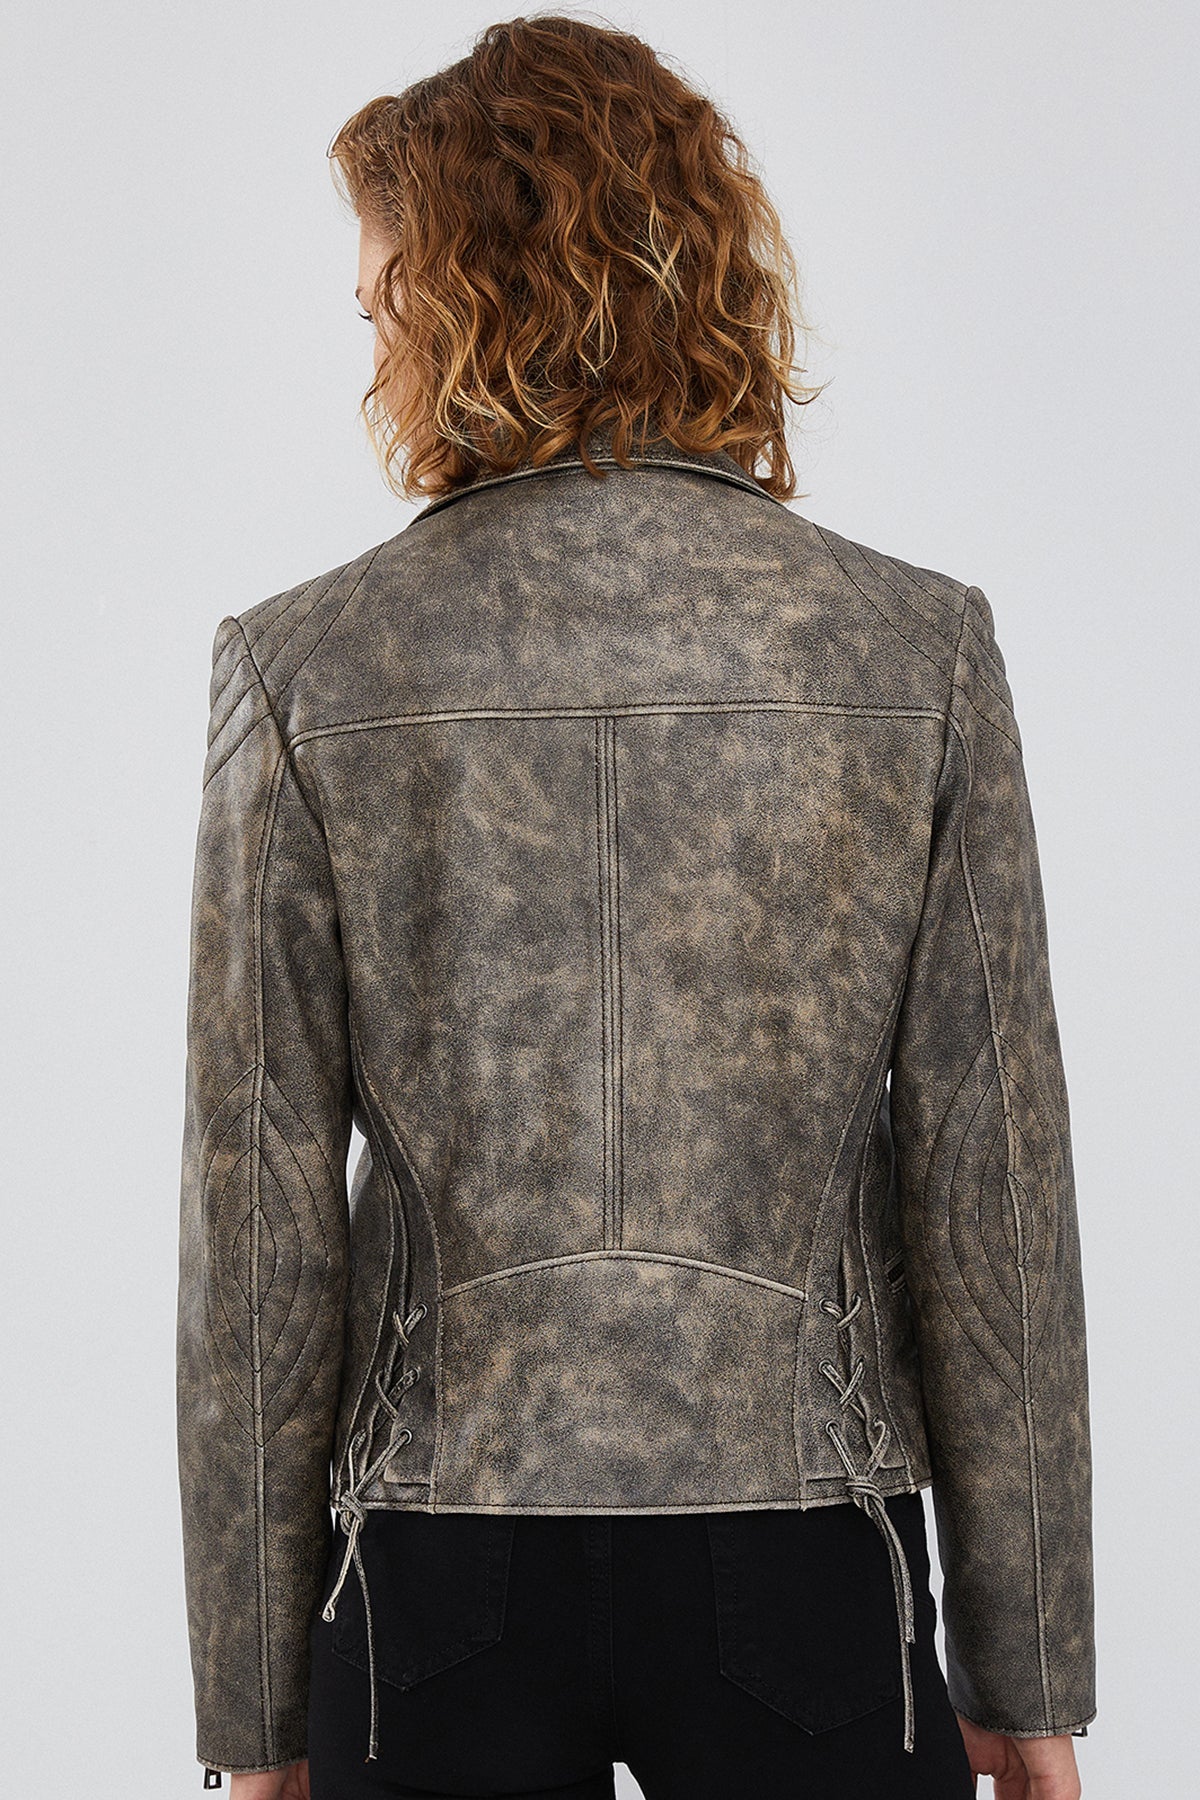 Xuma Women's Gray Leather Biker Jacket